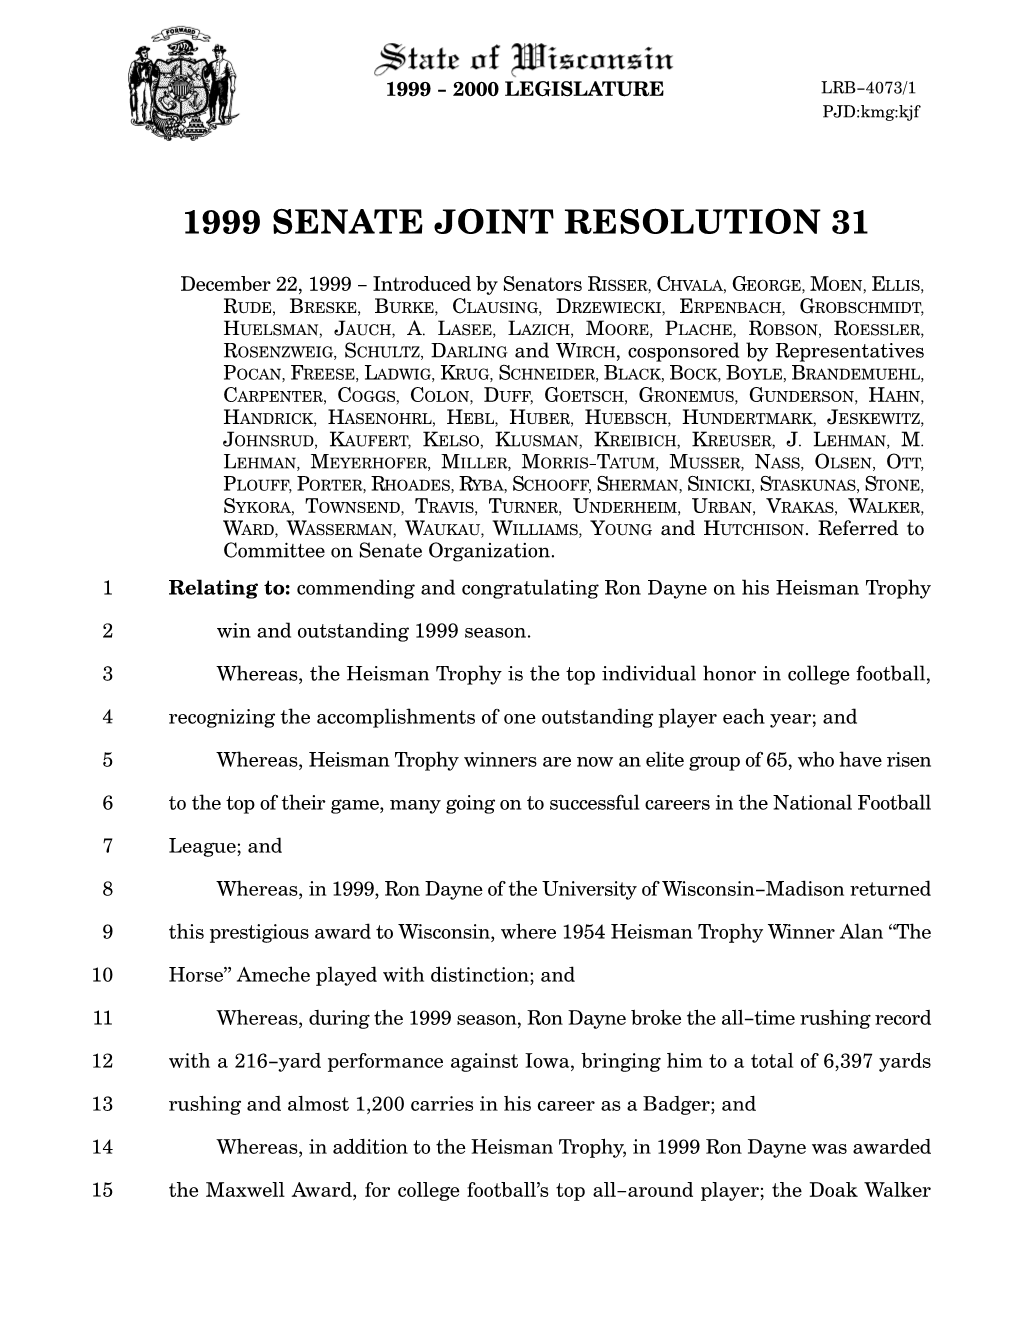 1999 Senate Joint Resolution 31